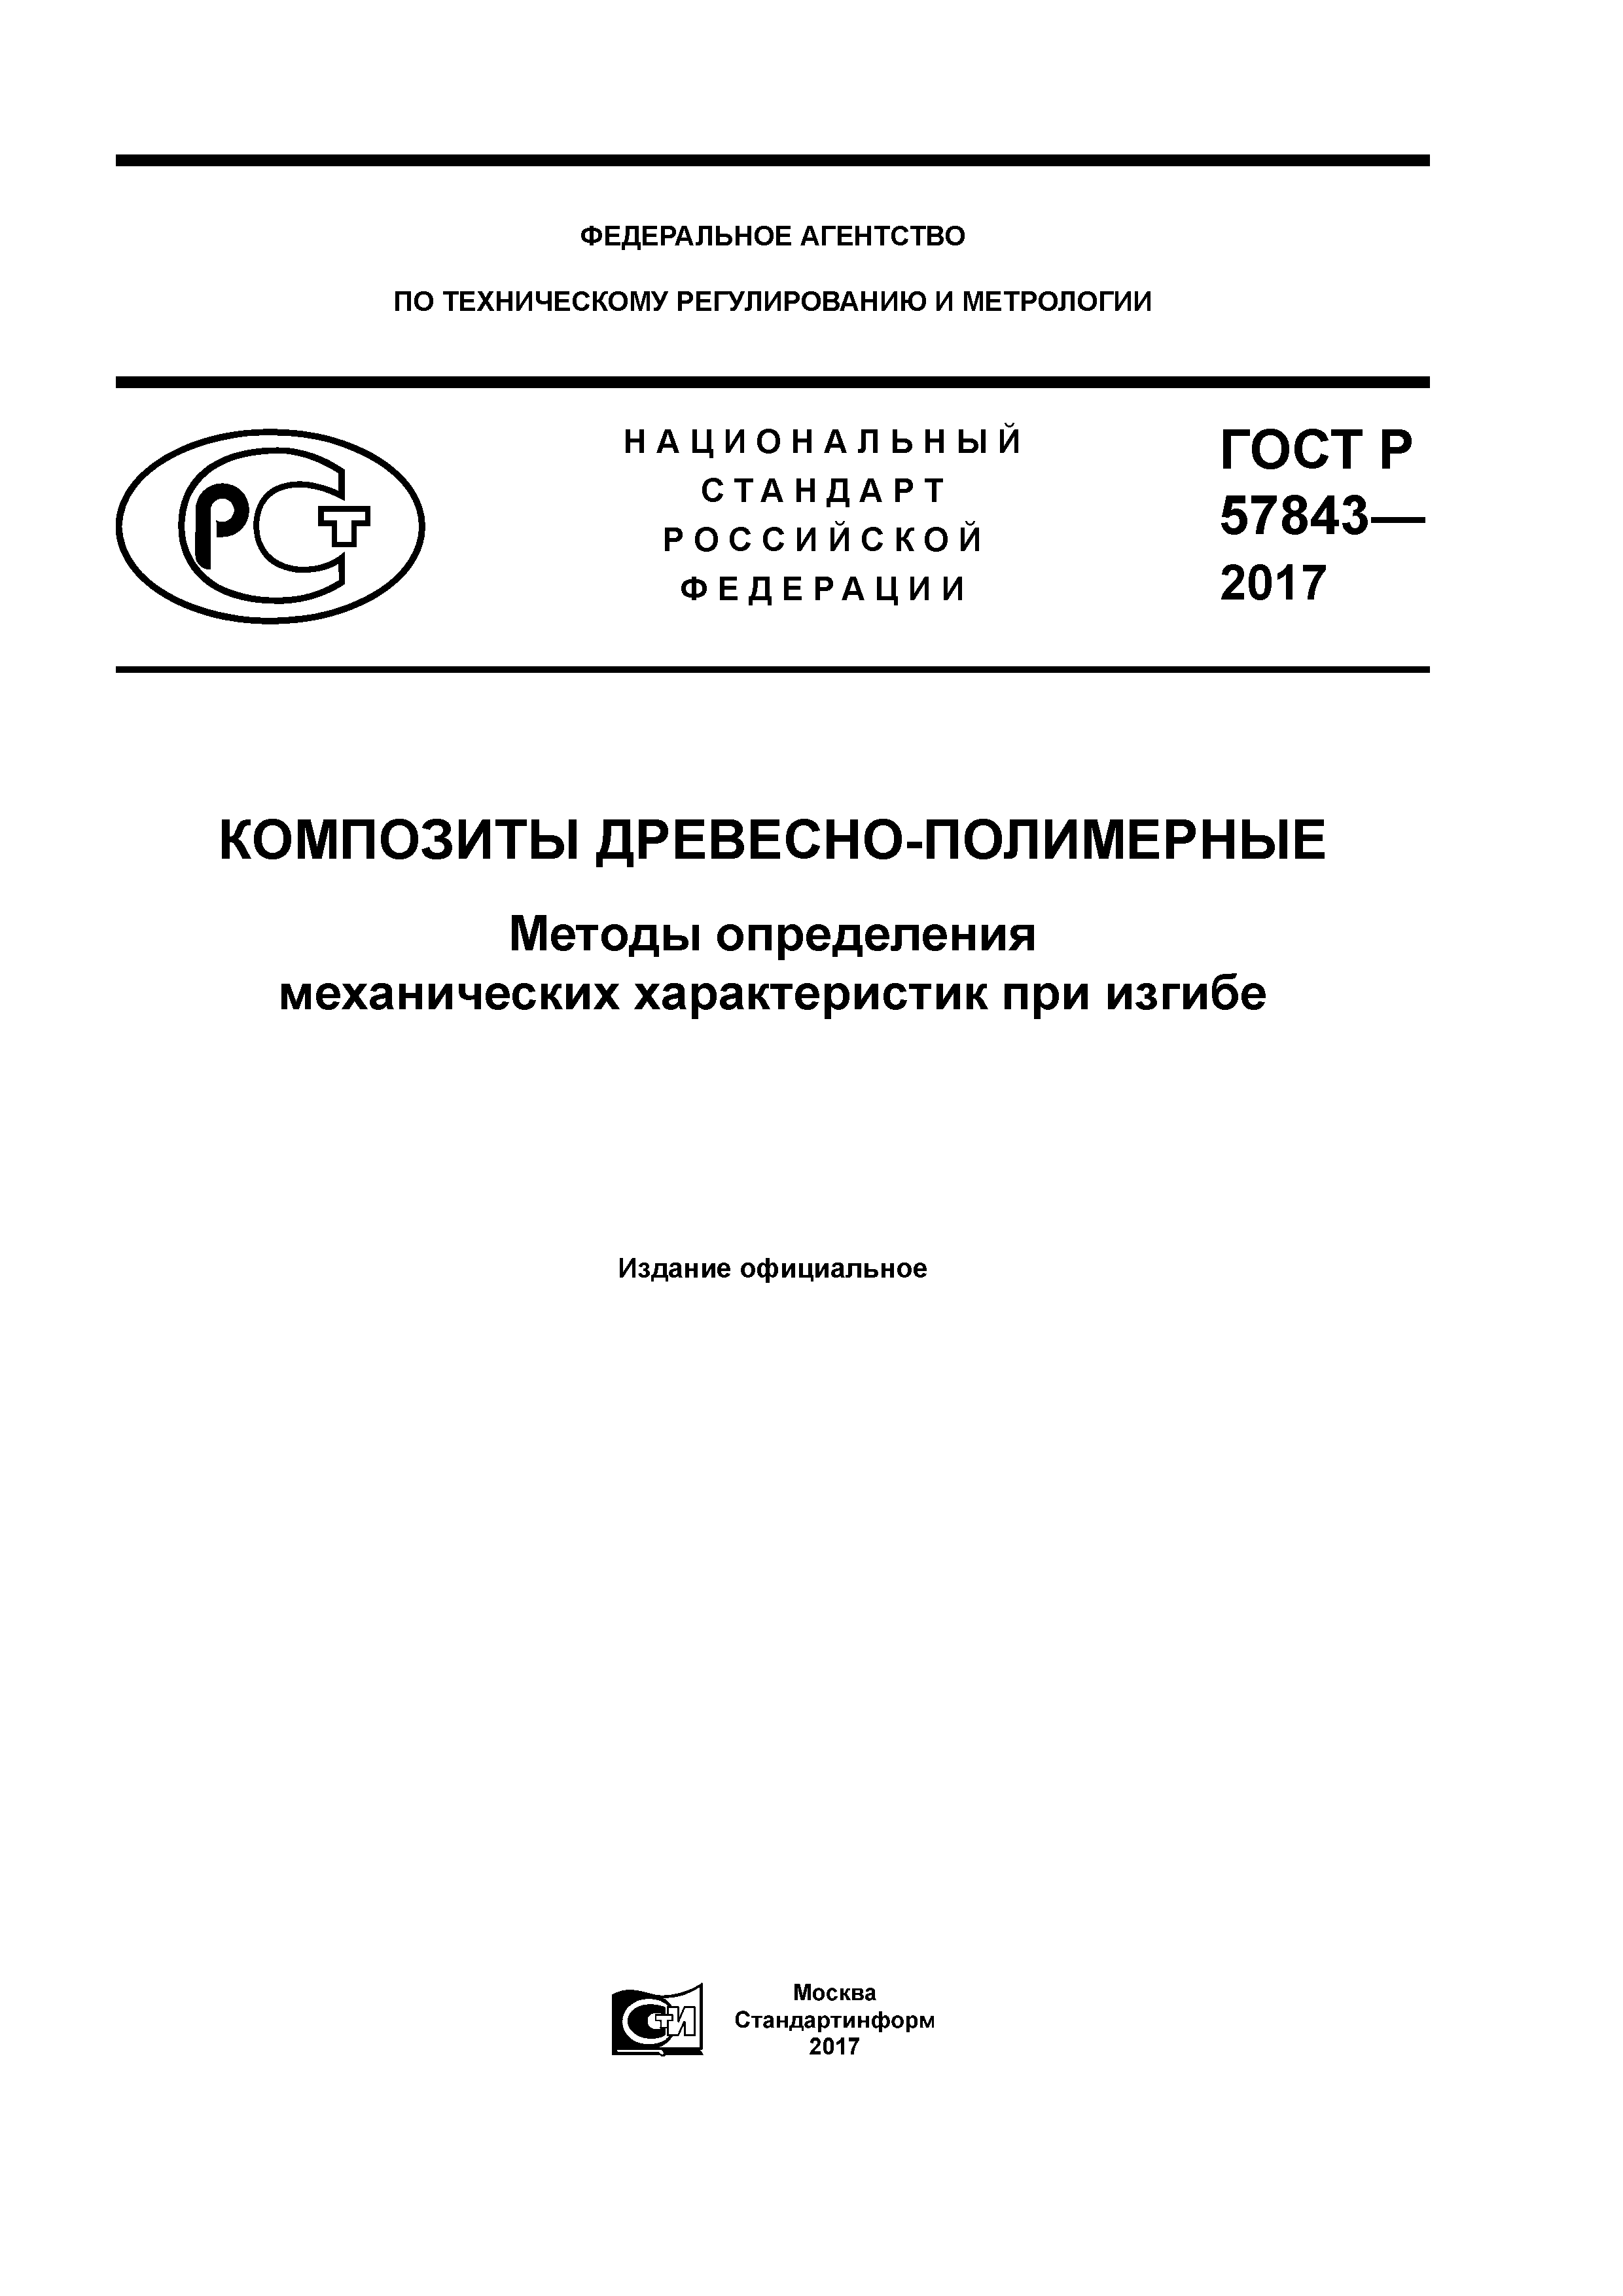 ГОСТ Р 57843-2017